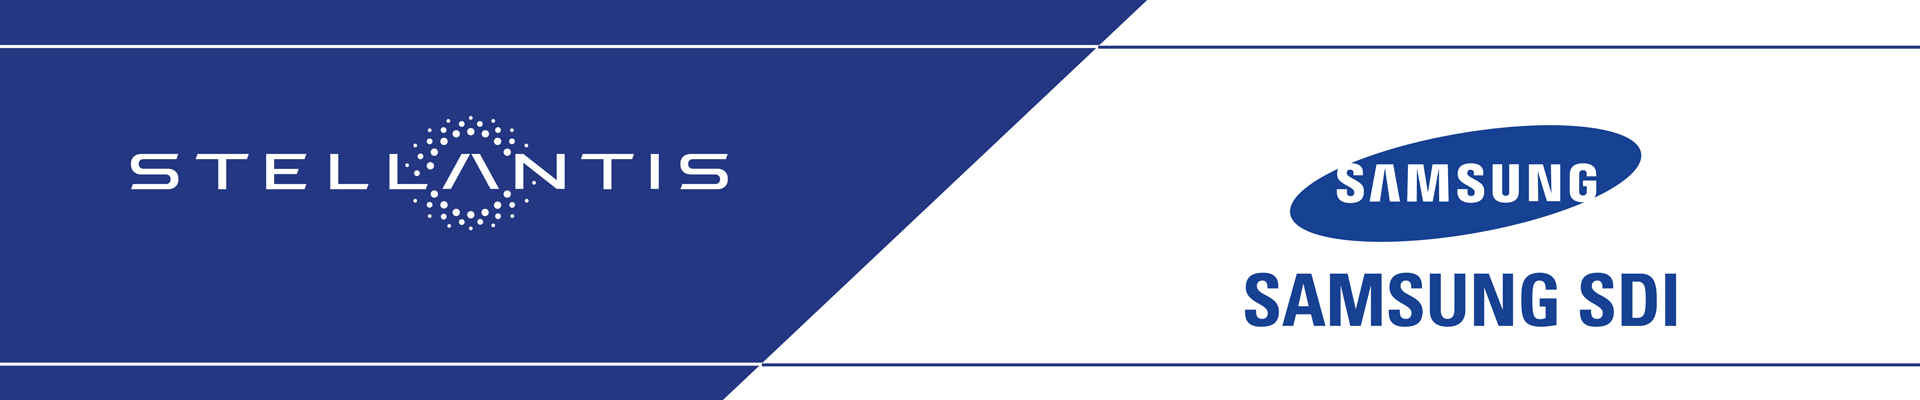 Image de Stellantis et Samsung logo